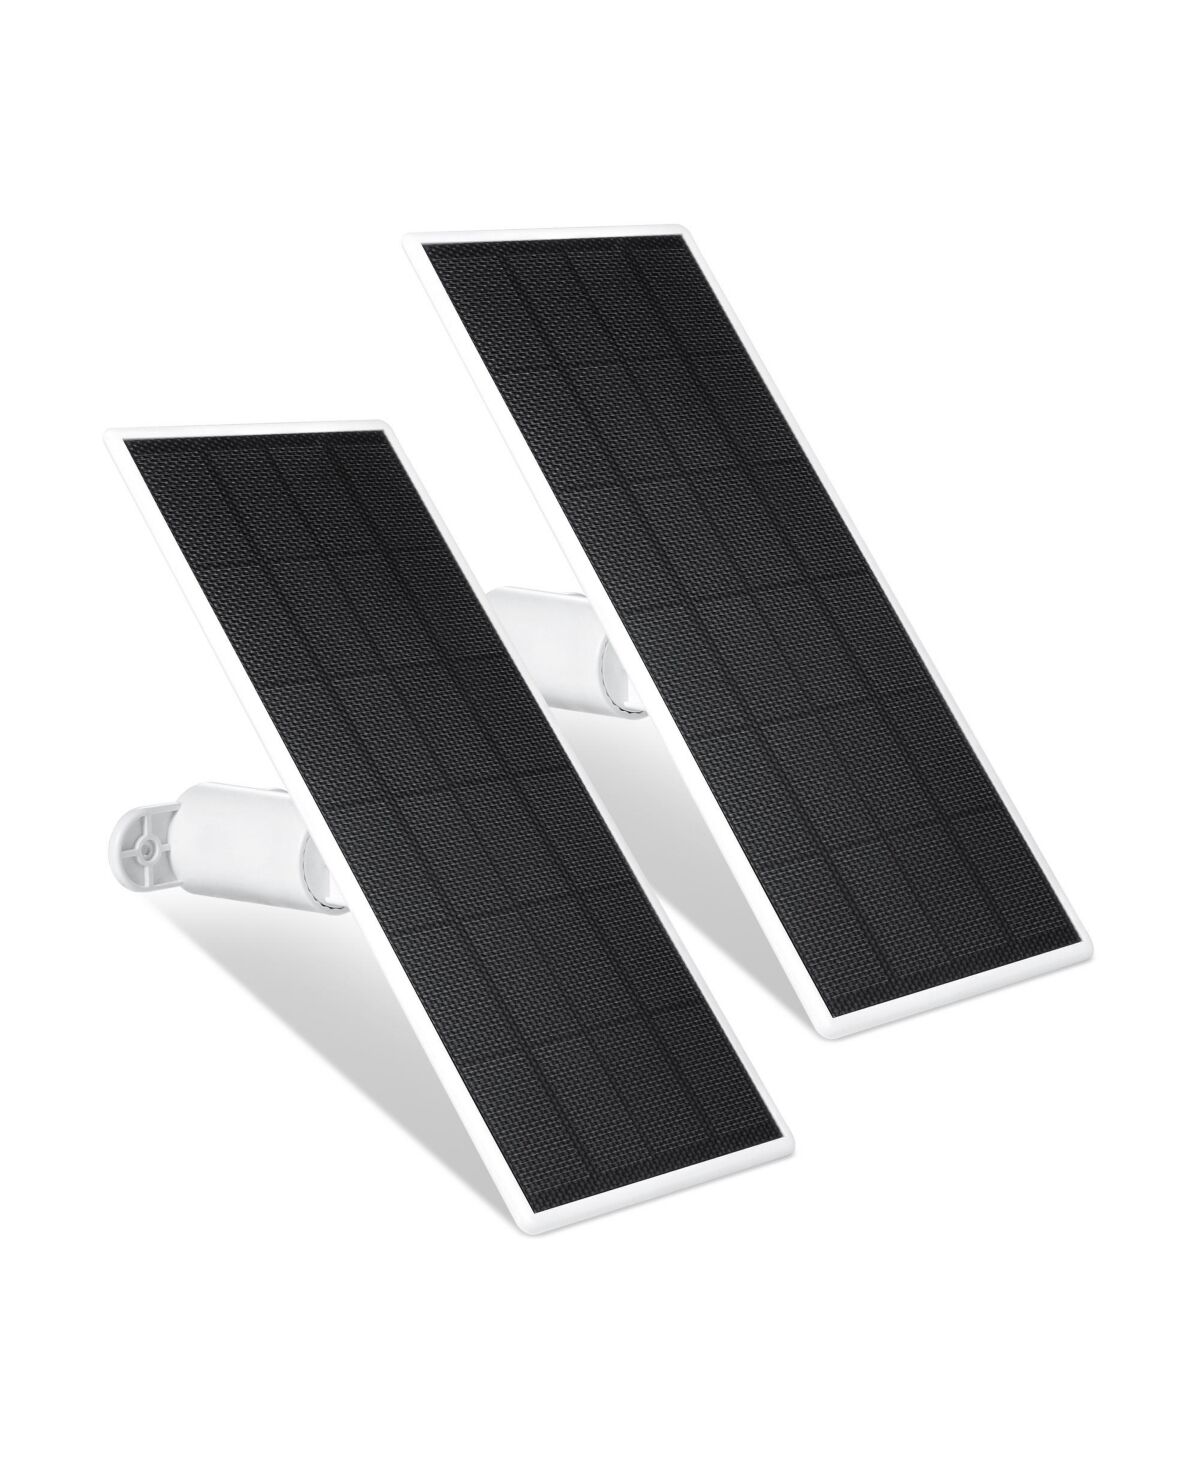 Wasserstein Solar Panel for Google Nest Cam Outdoor or Indoor, Battery - 2.5W Solar Power - Made for Google Nest (2 Pack) - White